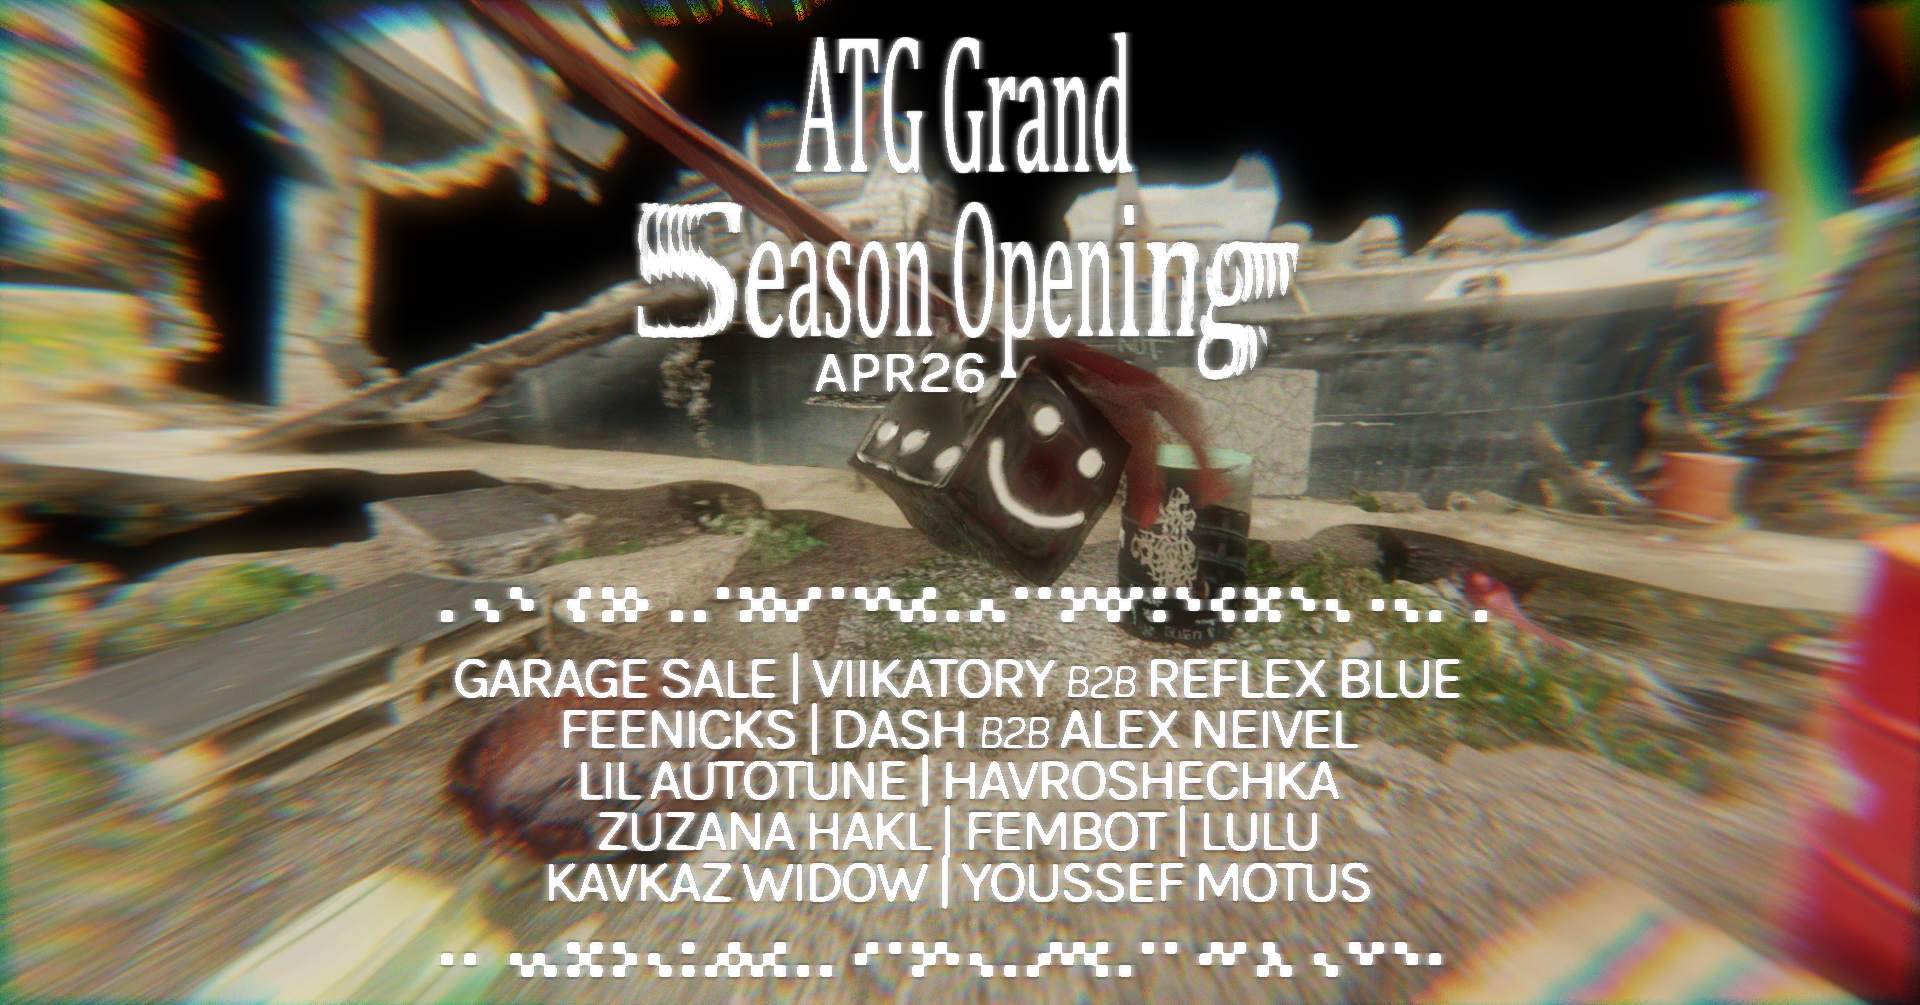 ATG Grand Season Opening - 𝐖𝐄𝐄𝐊𝐄𝐍𝐃𝐄𝐑 - フライヤー表